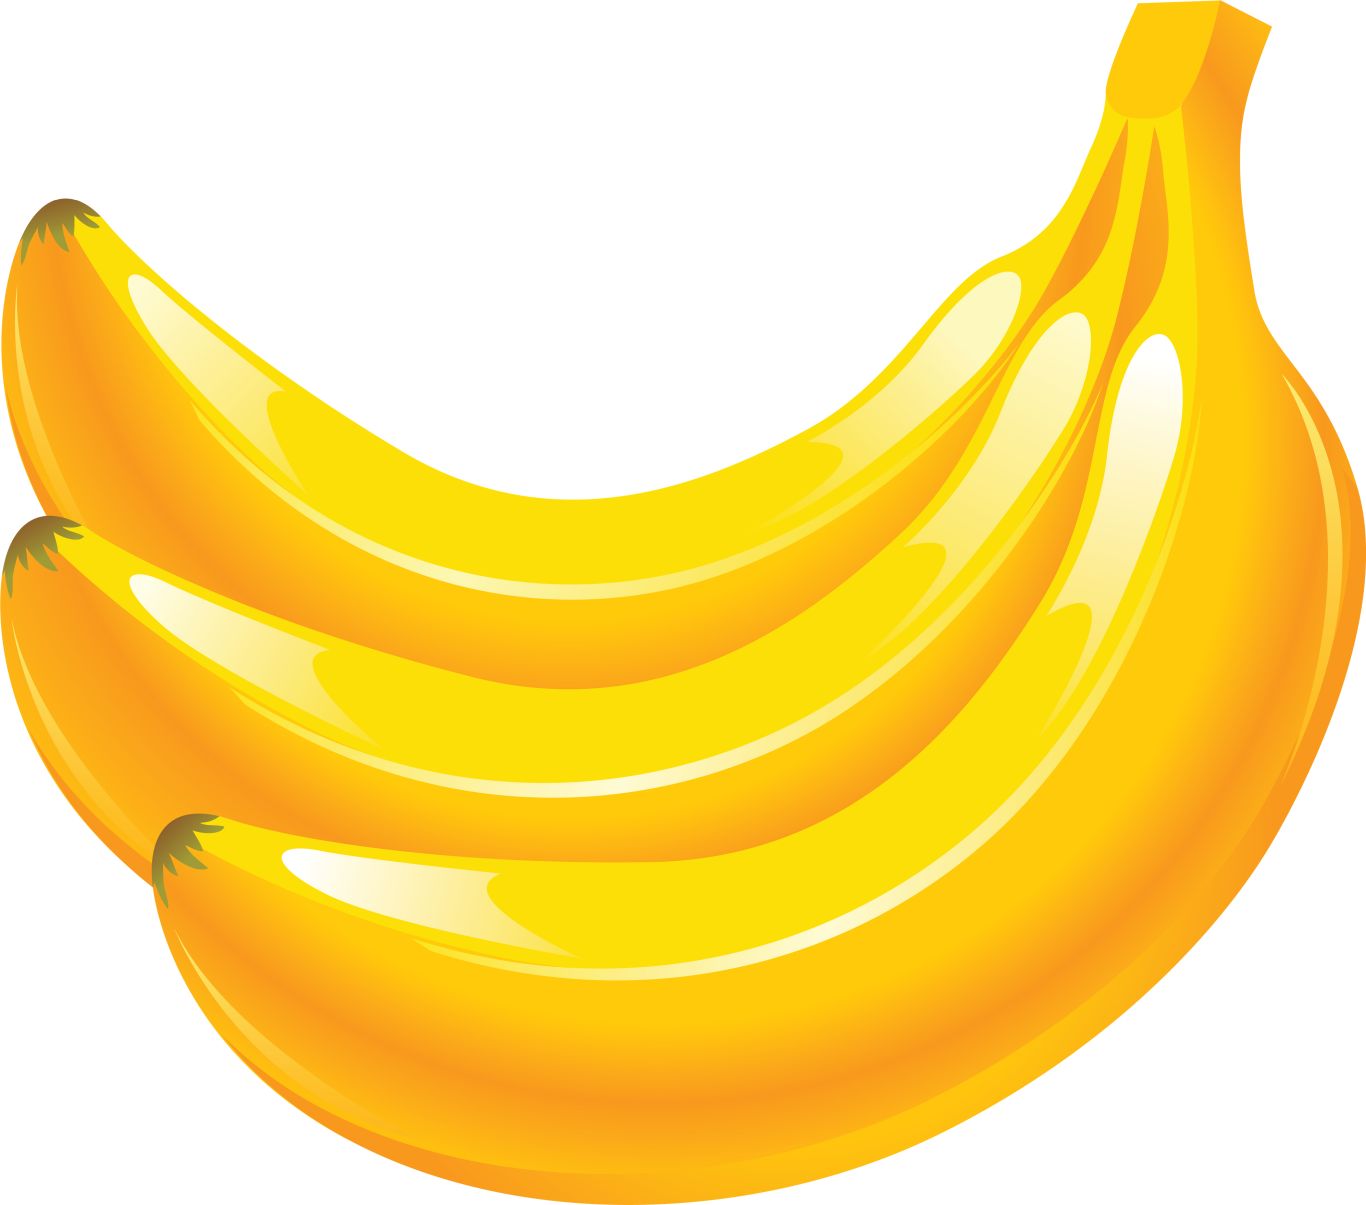 three yellow bananas PNG image    图片编号:838